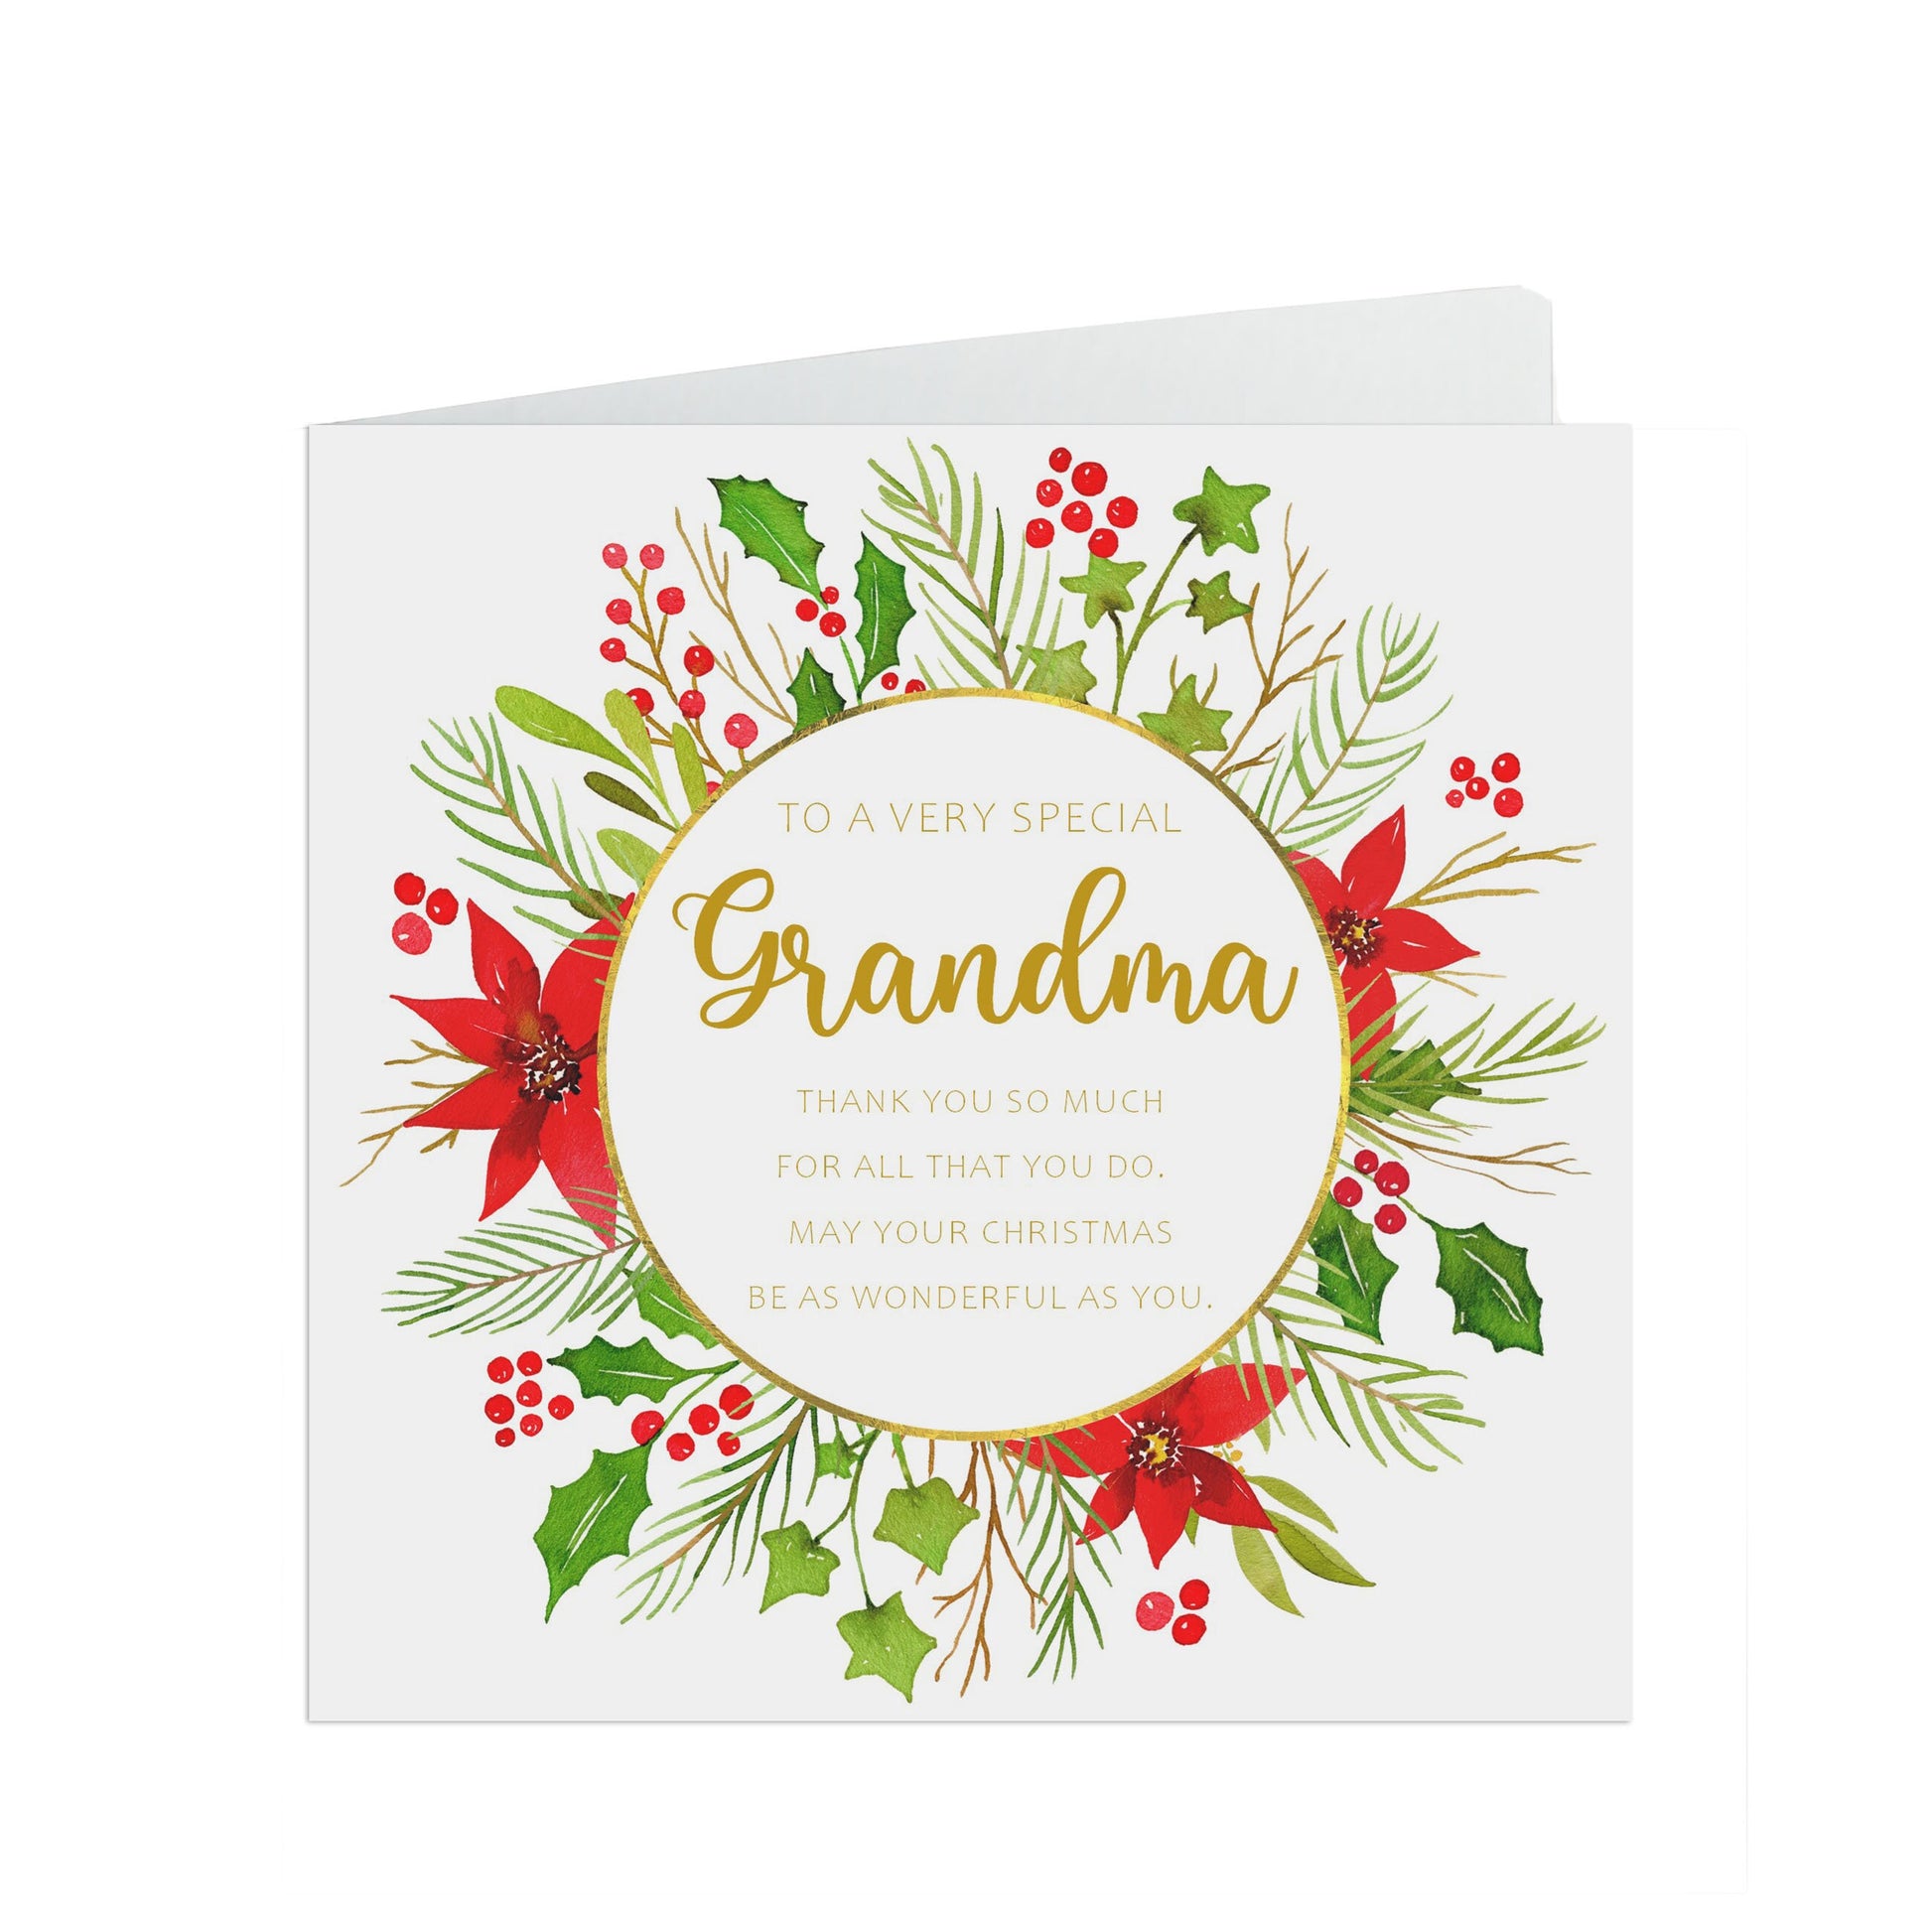 Grandma Christmas Card, Traditional Poinsettia Design